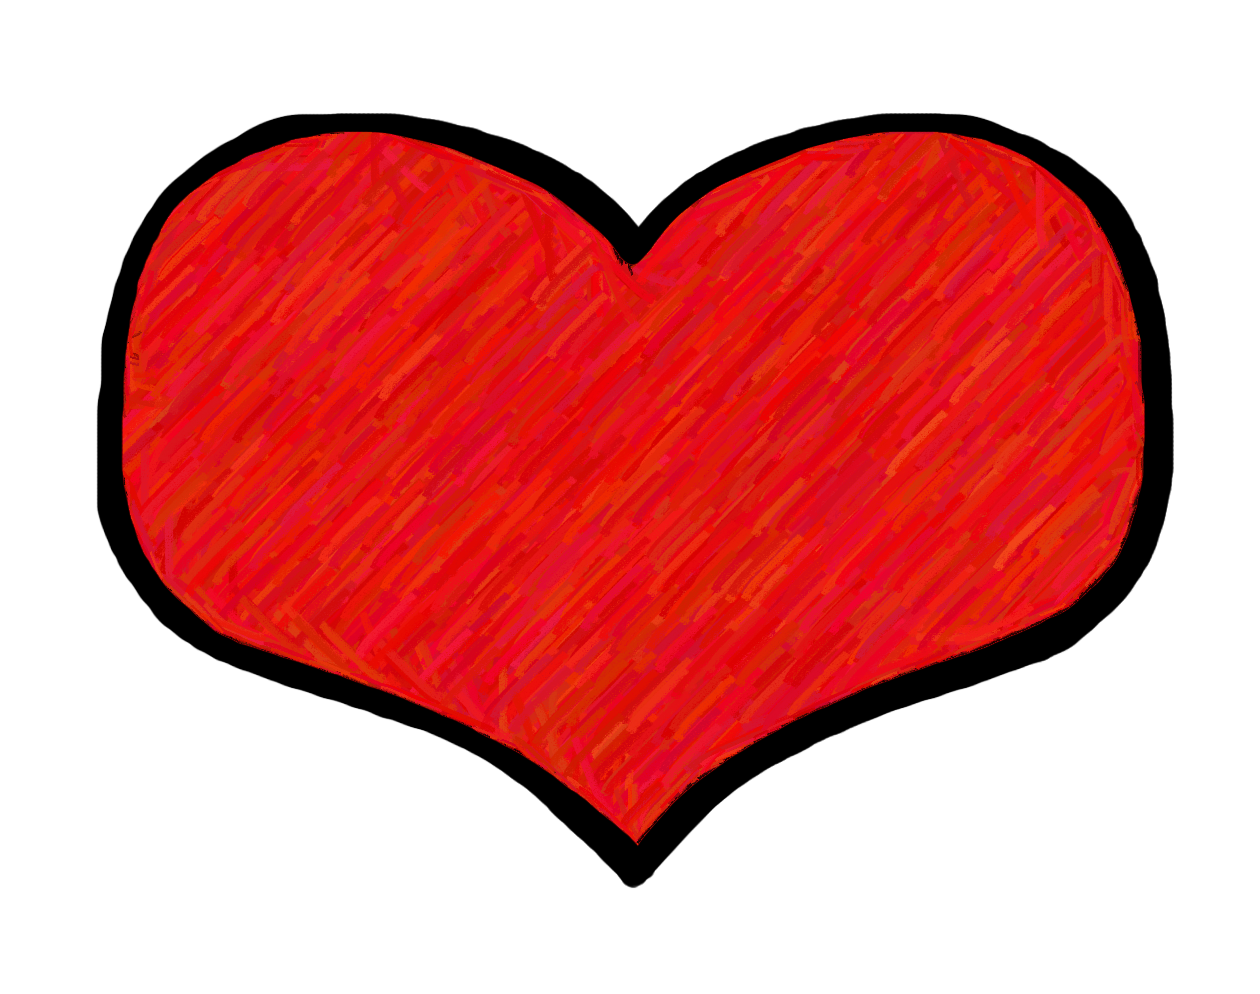 Cute heart clipart download - ClipartFox